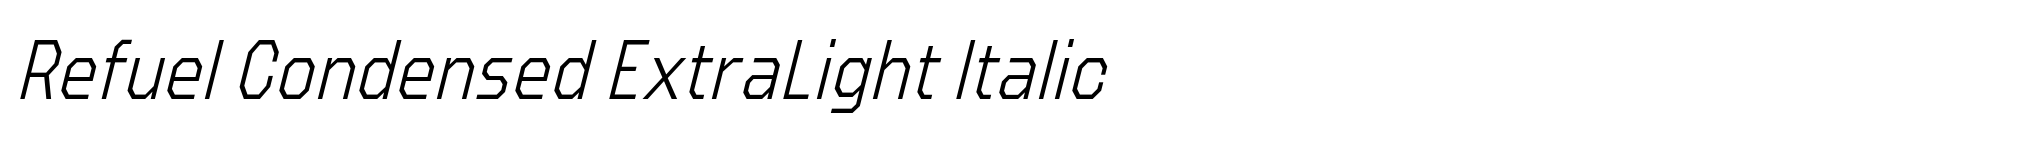 Refuel Condensed ExtraLight Italic image